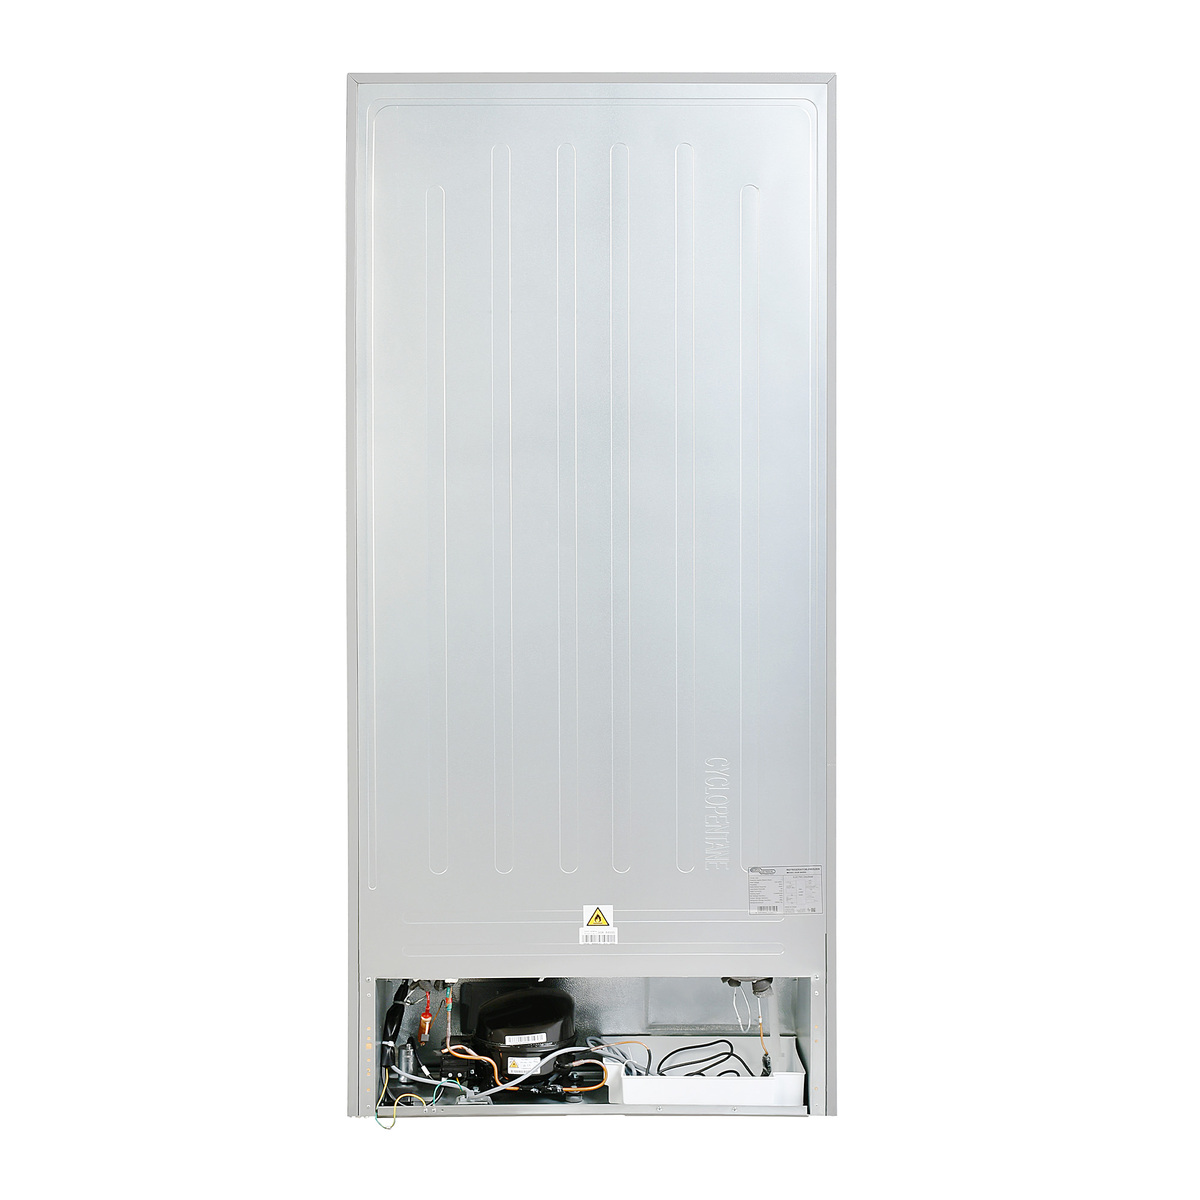 Super General Double Door Refrigerator, 750 L, Silver, SGR 845 SS